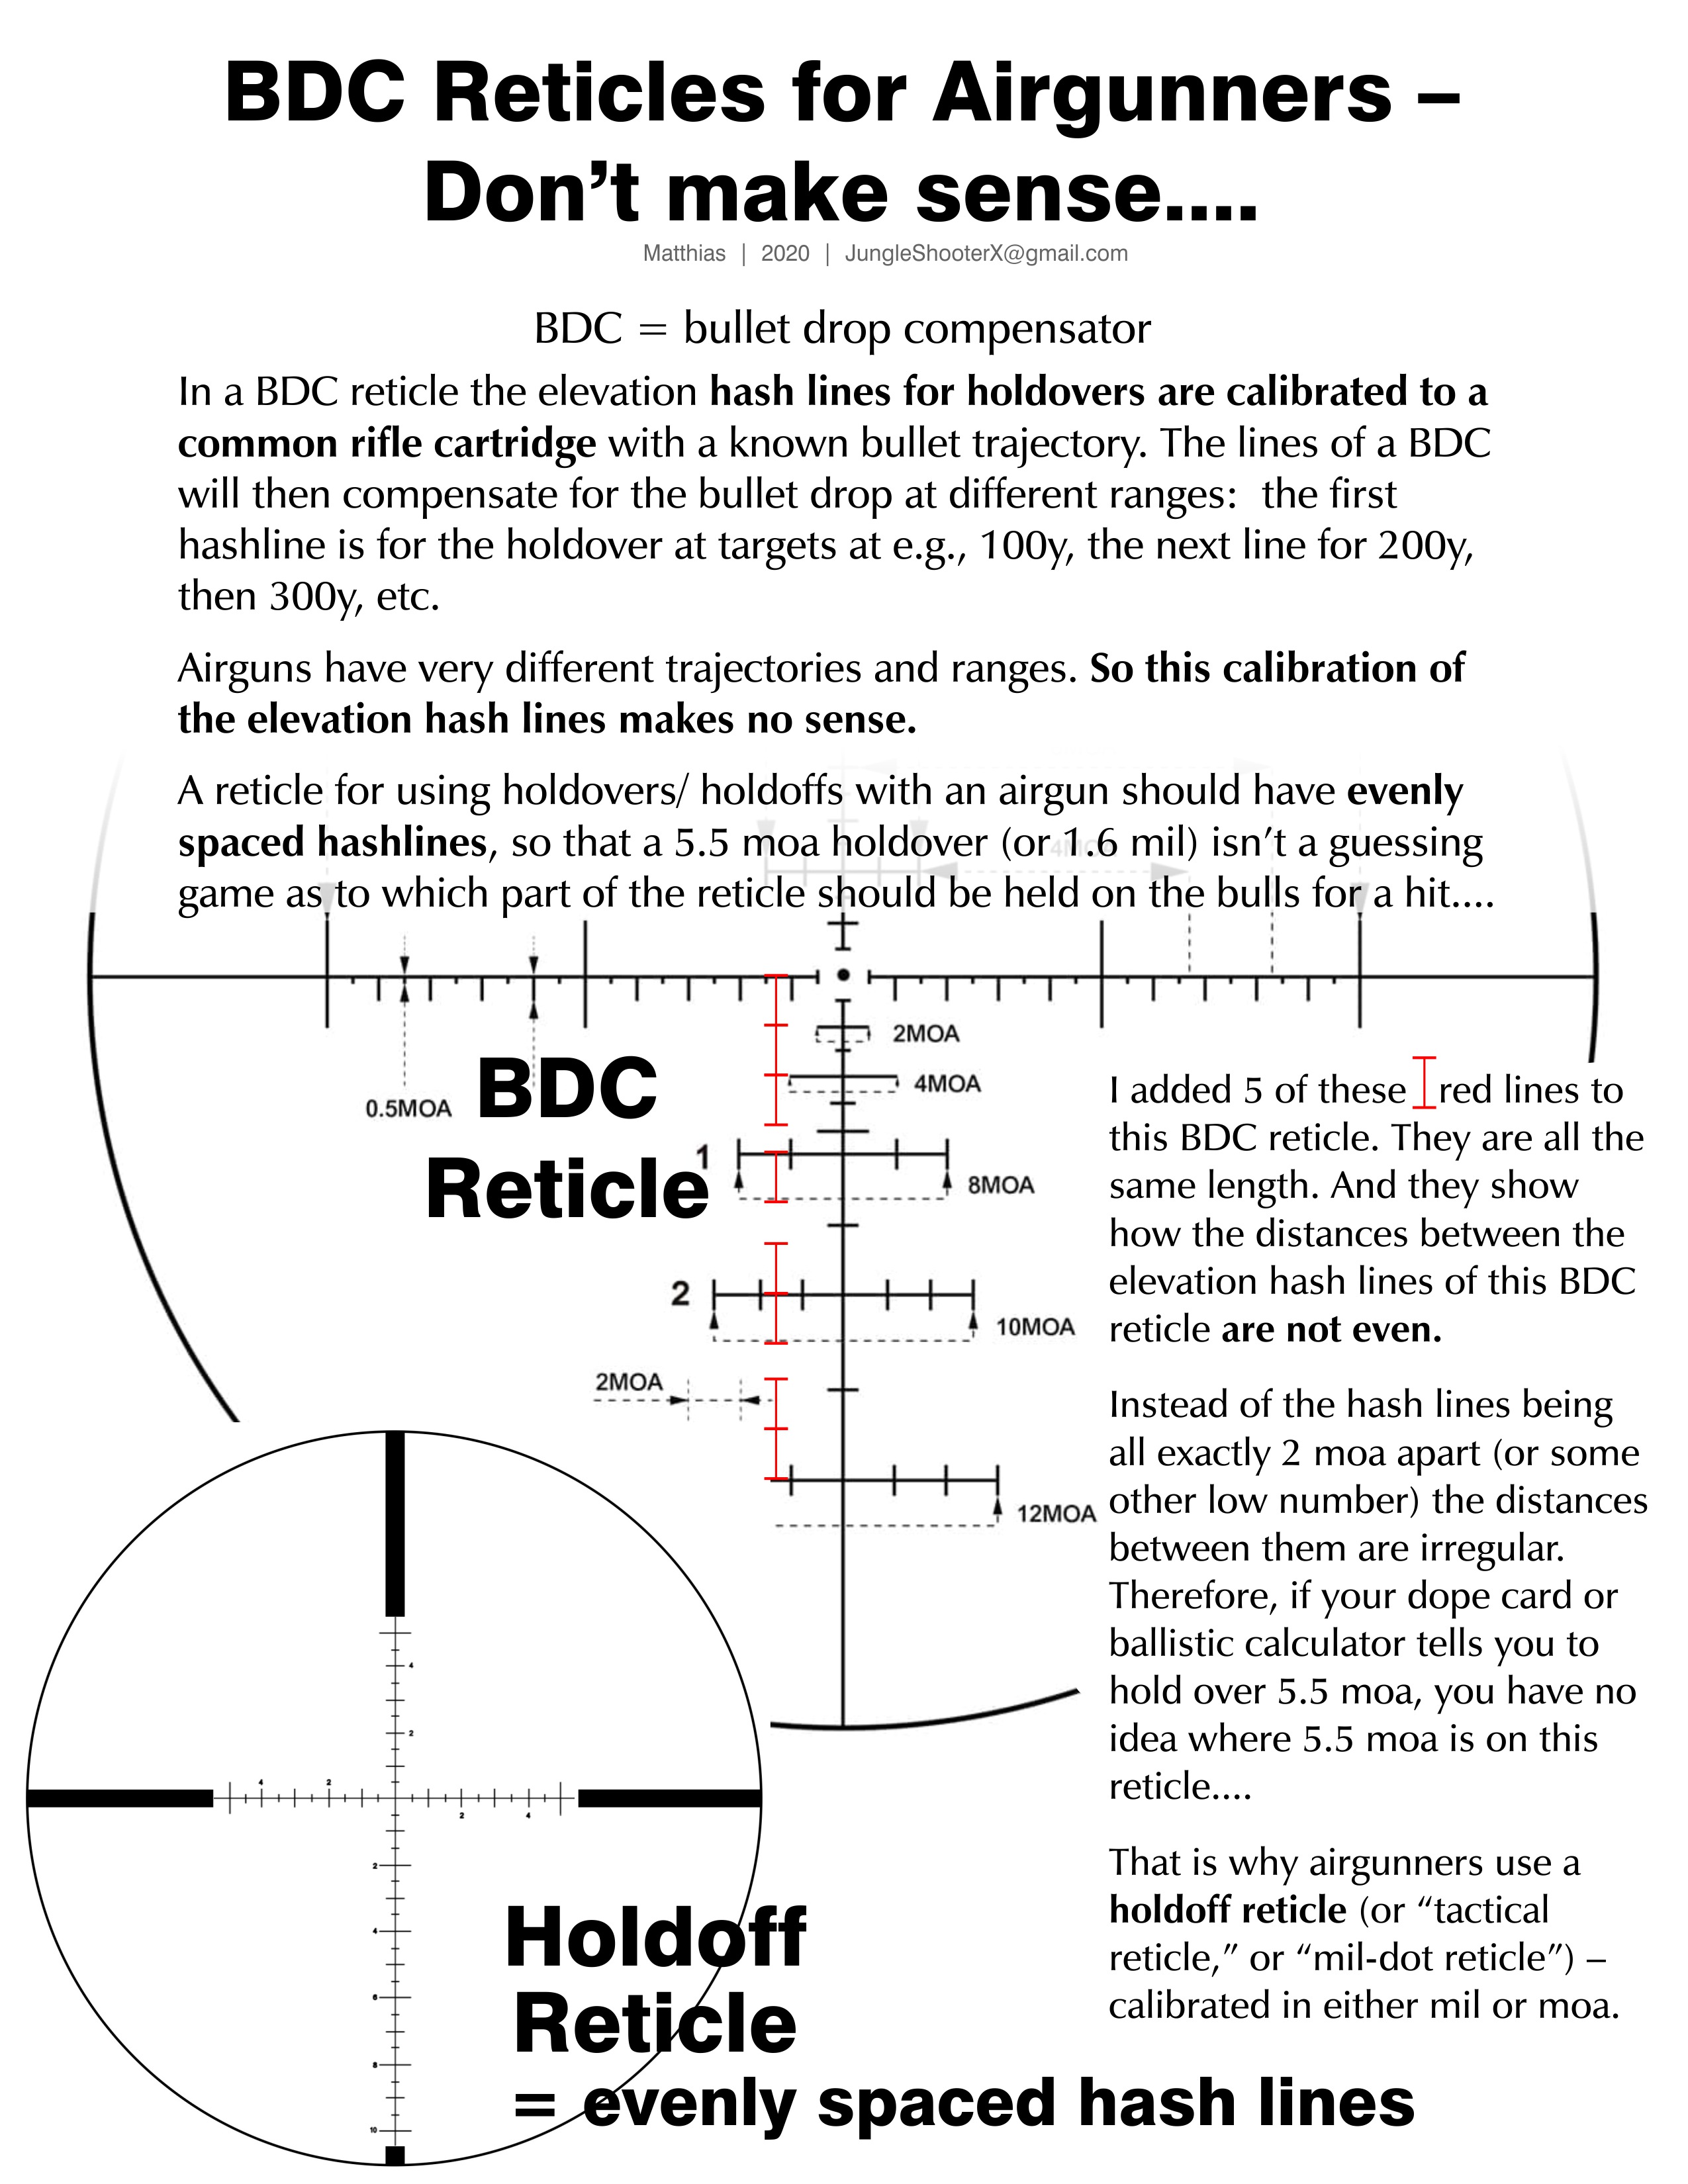 SCOPES. BDC Reticle vs. Holdoff Reticle.jpg